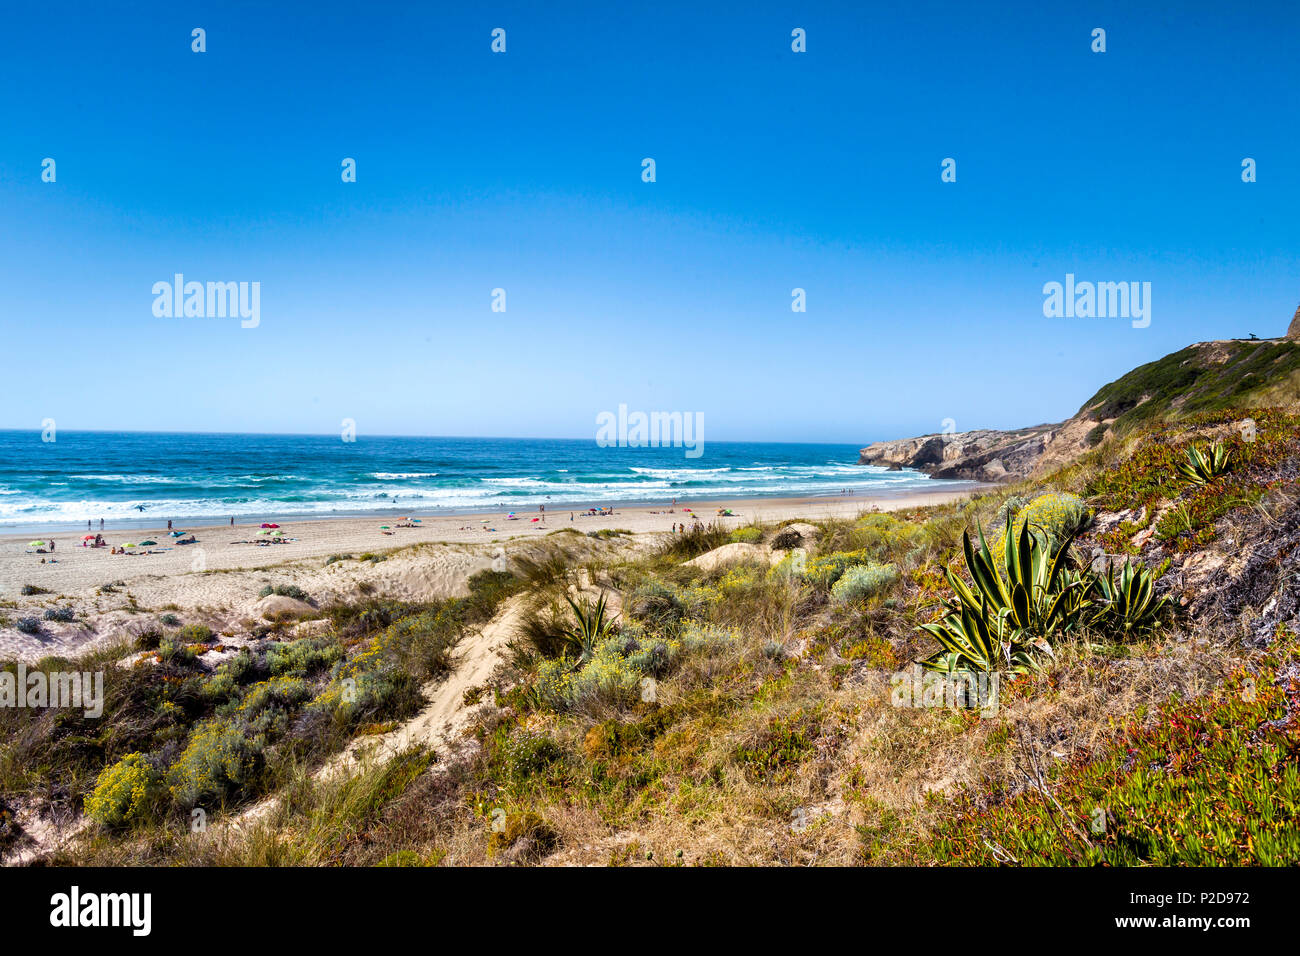 Beach, Praia de Monte Clerigo, Aljezur, Costa Vicentina, Algarve, Portugal Stock Photo